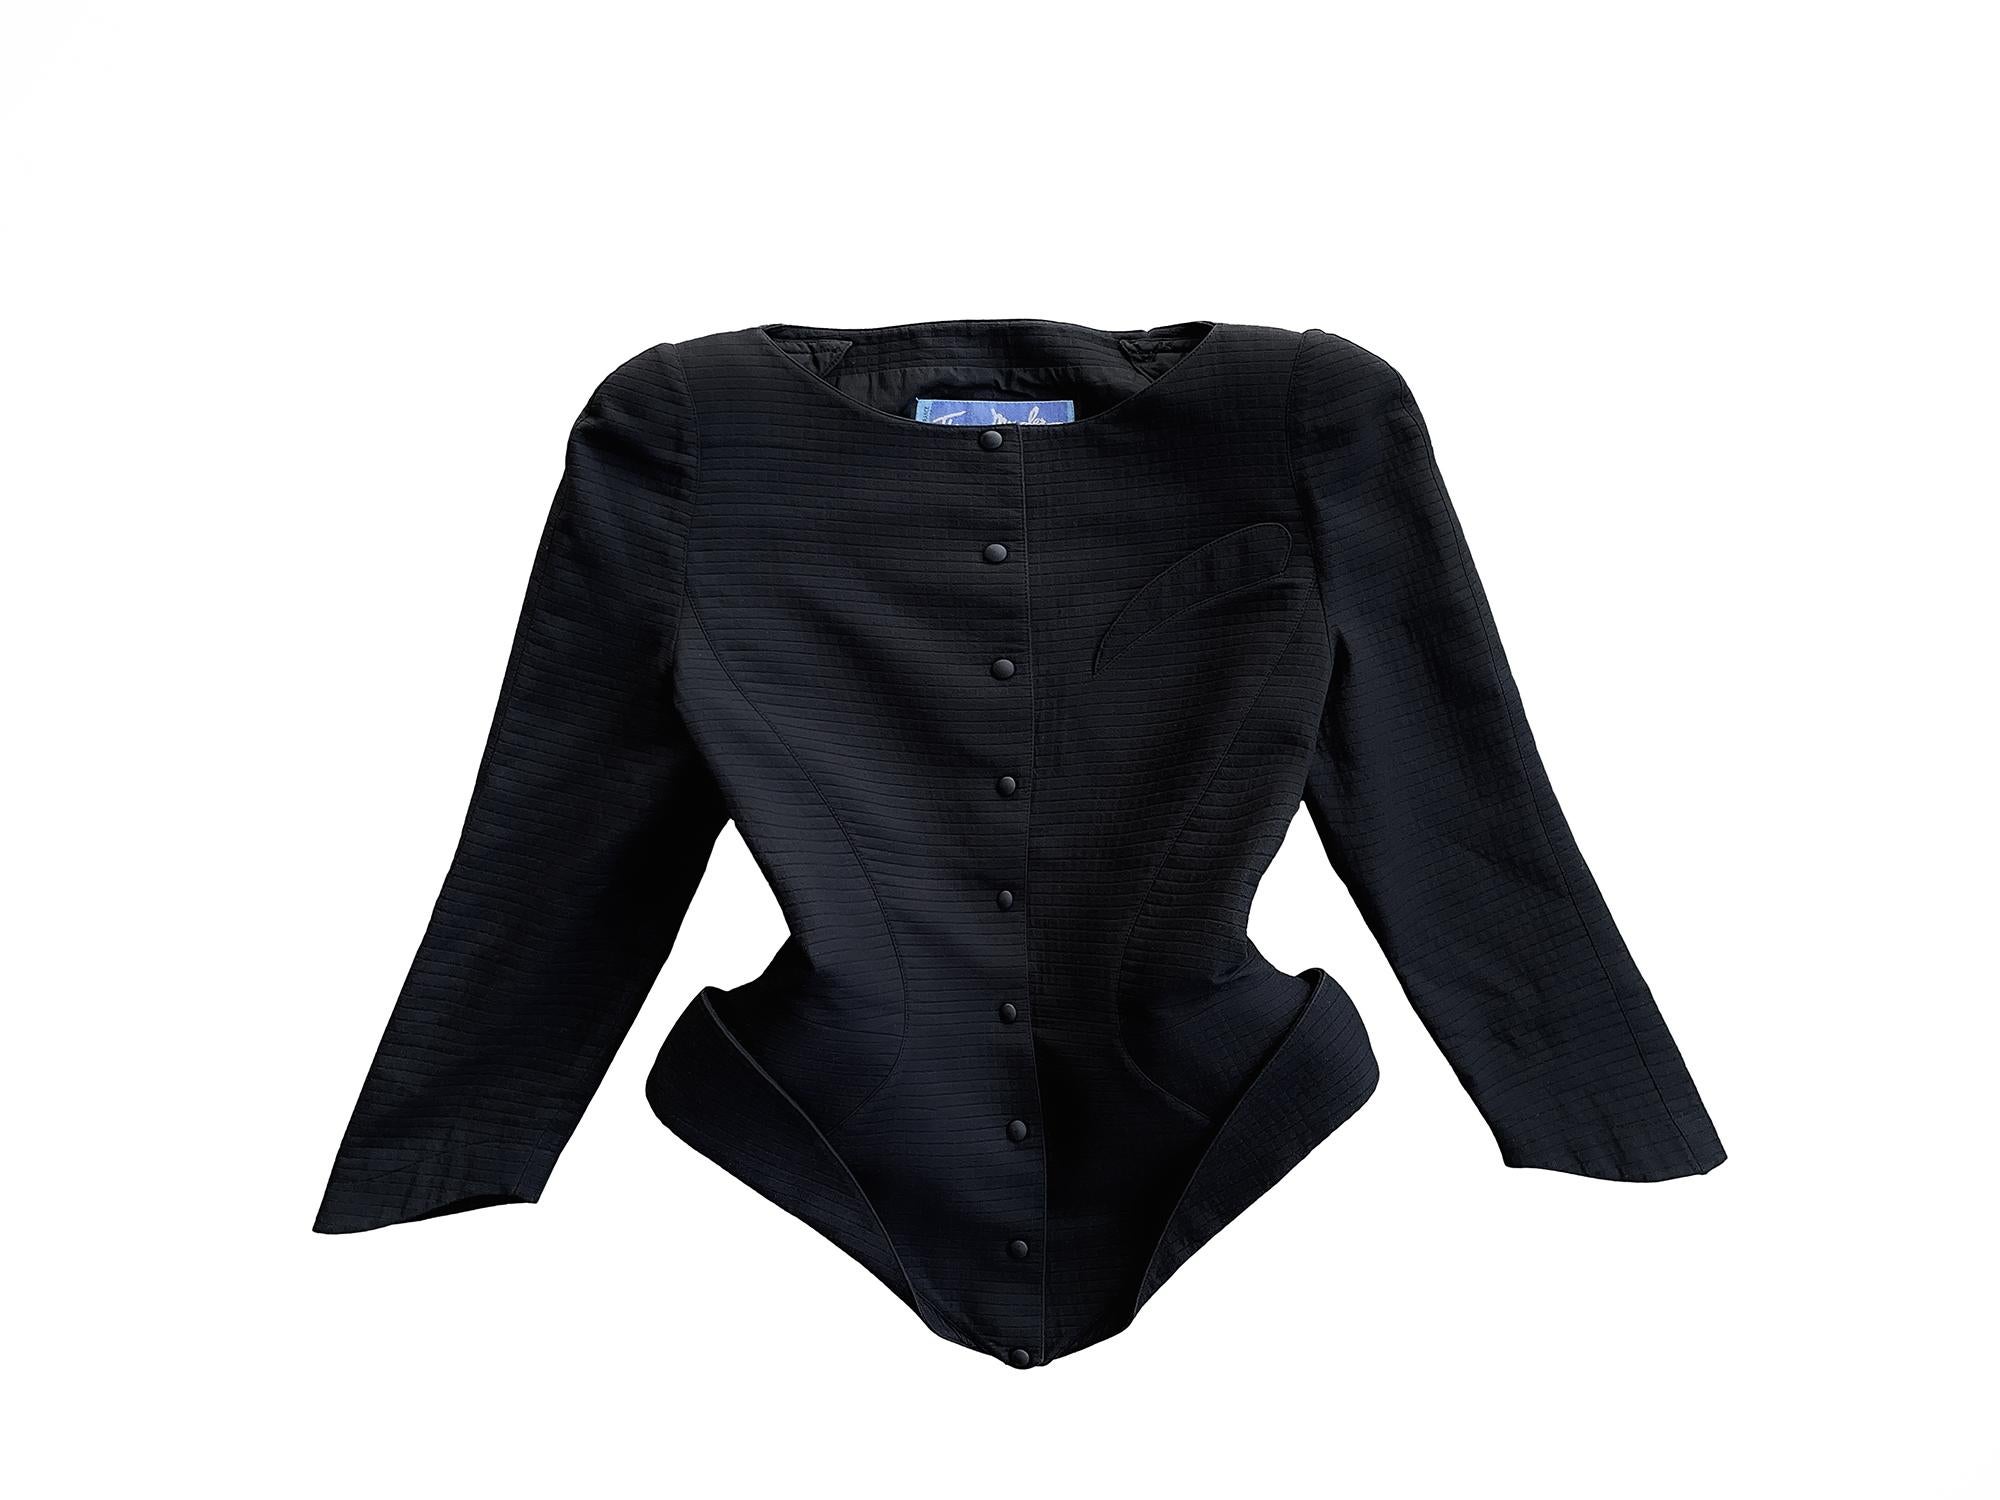 Black Thierry Mugler 1989 Dramatic Sculptural  Avant- Garde Jacket Top For Sale